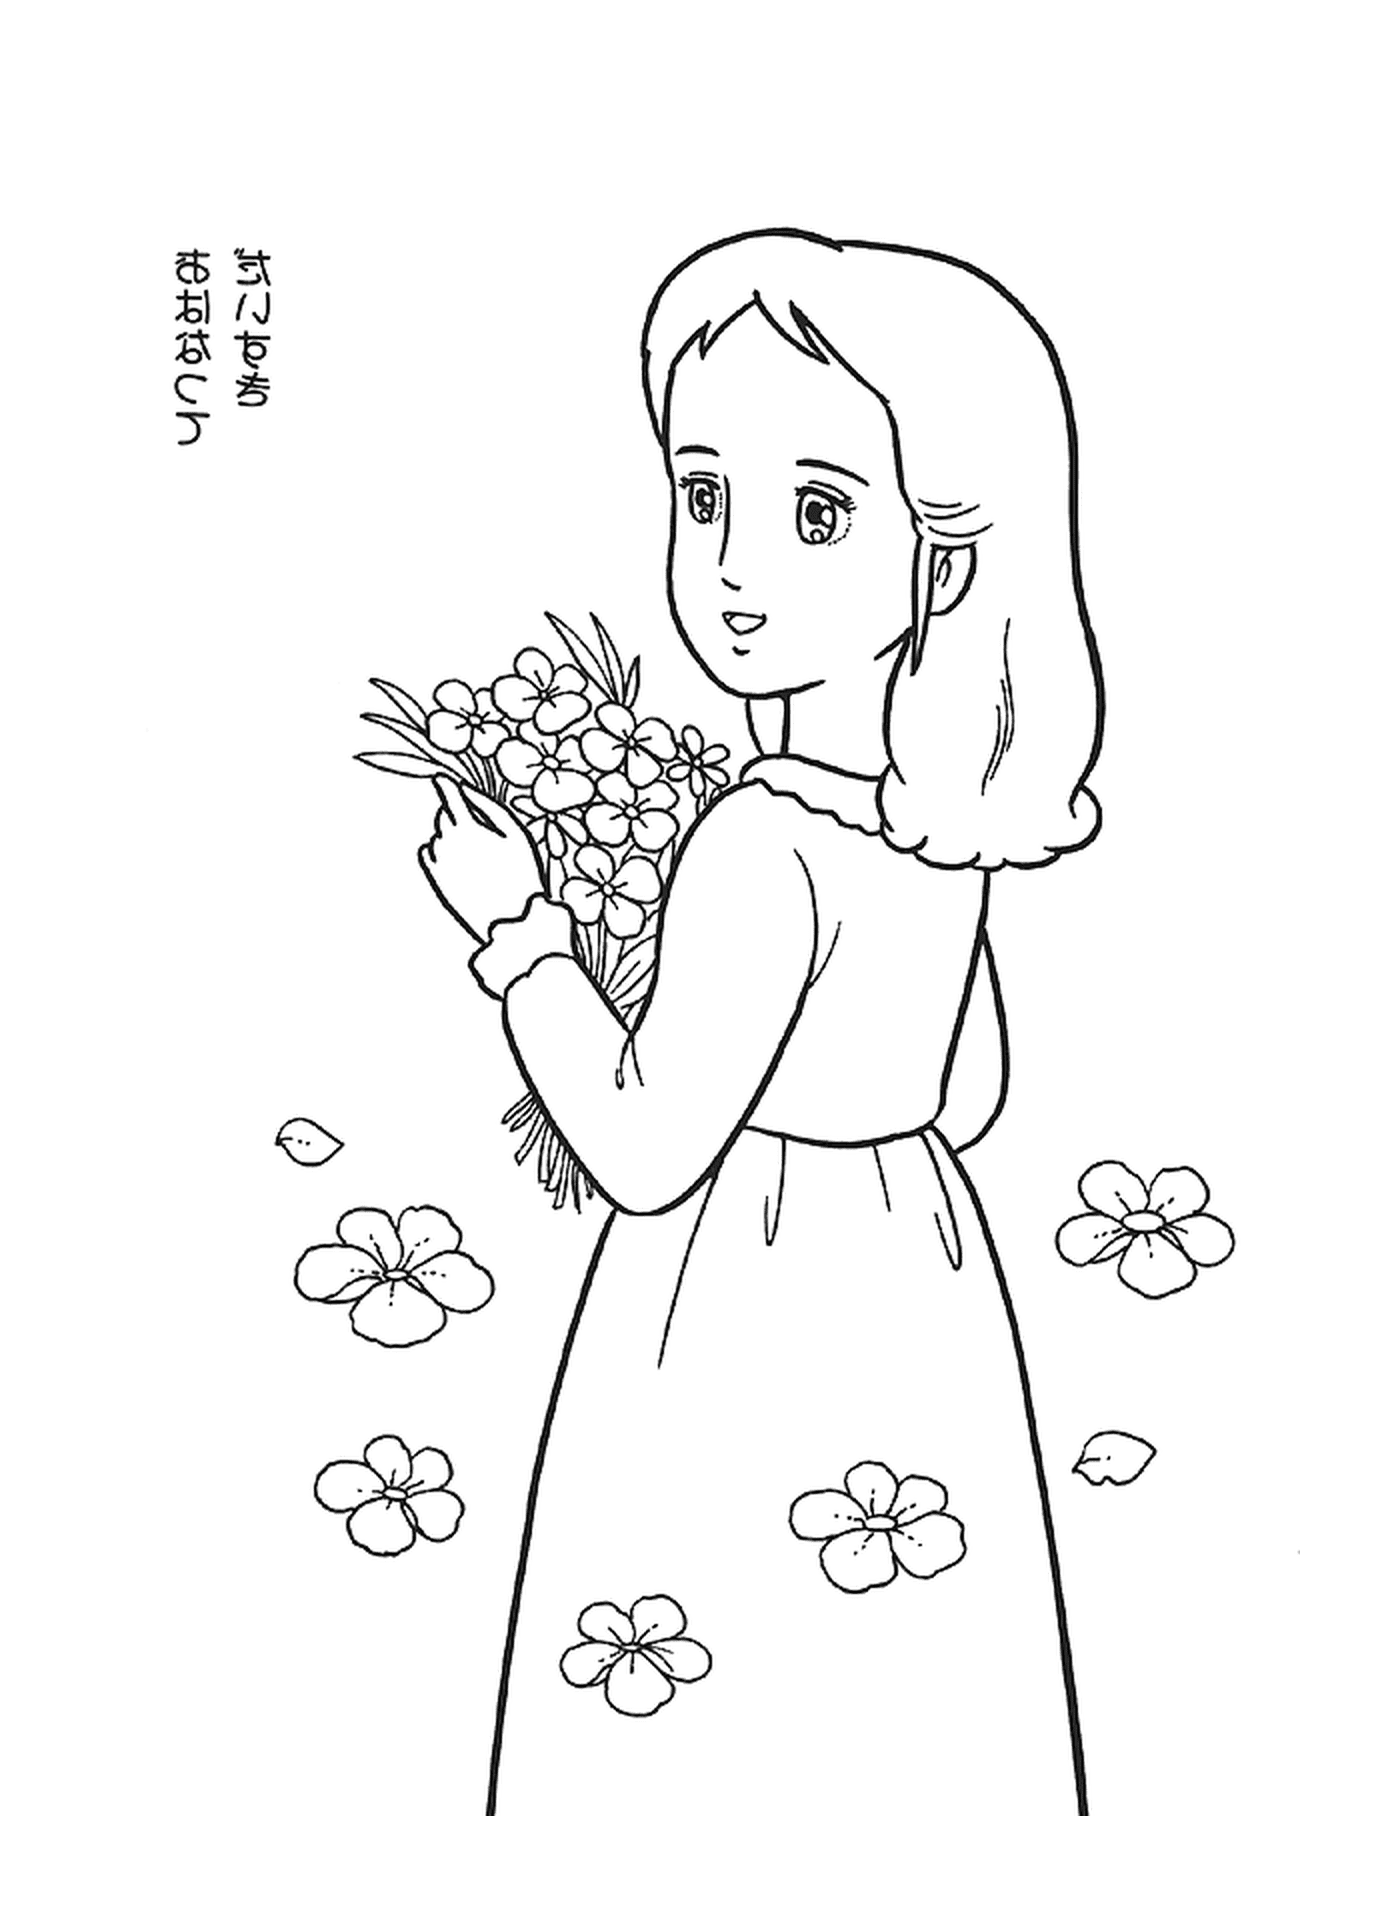  Woman holding bouquet flowers hands 